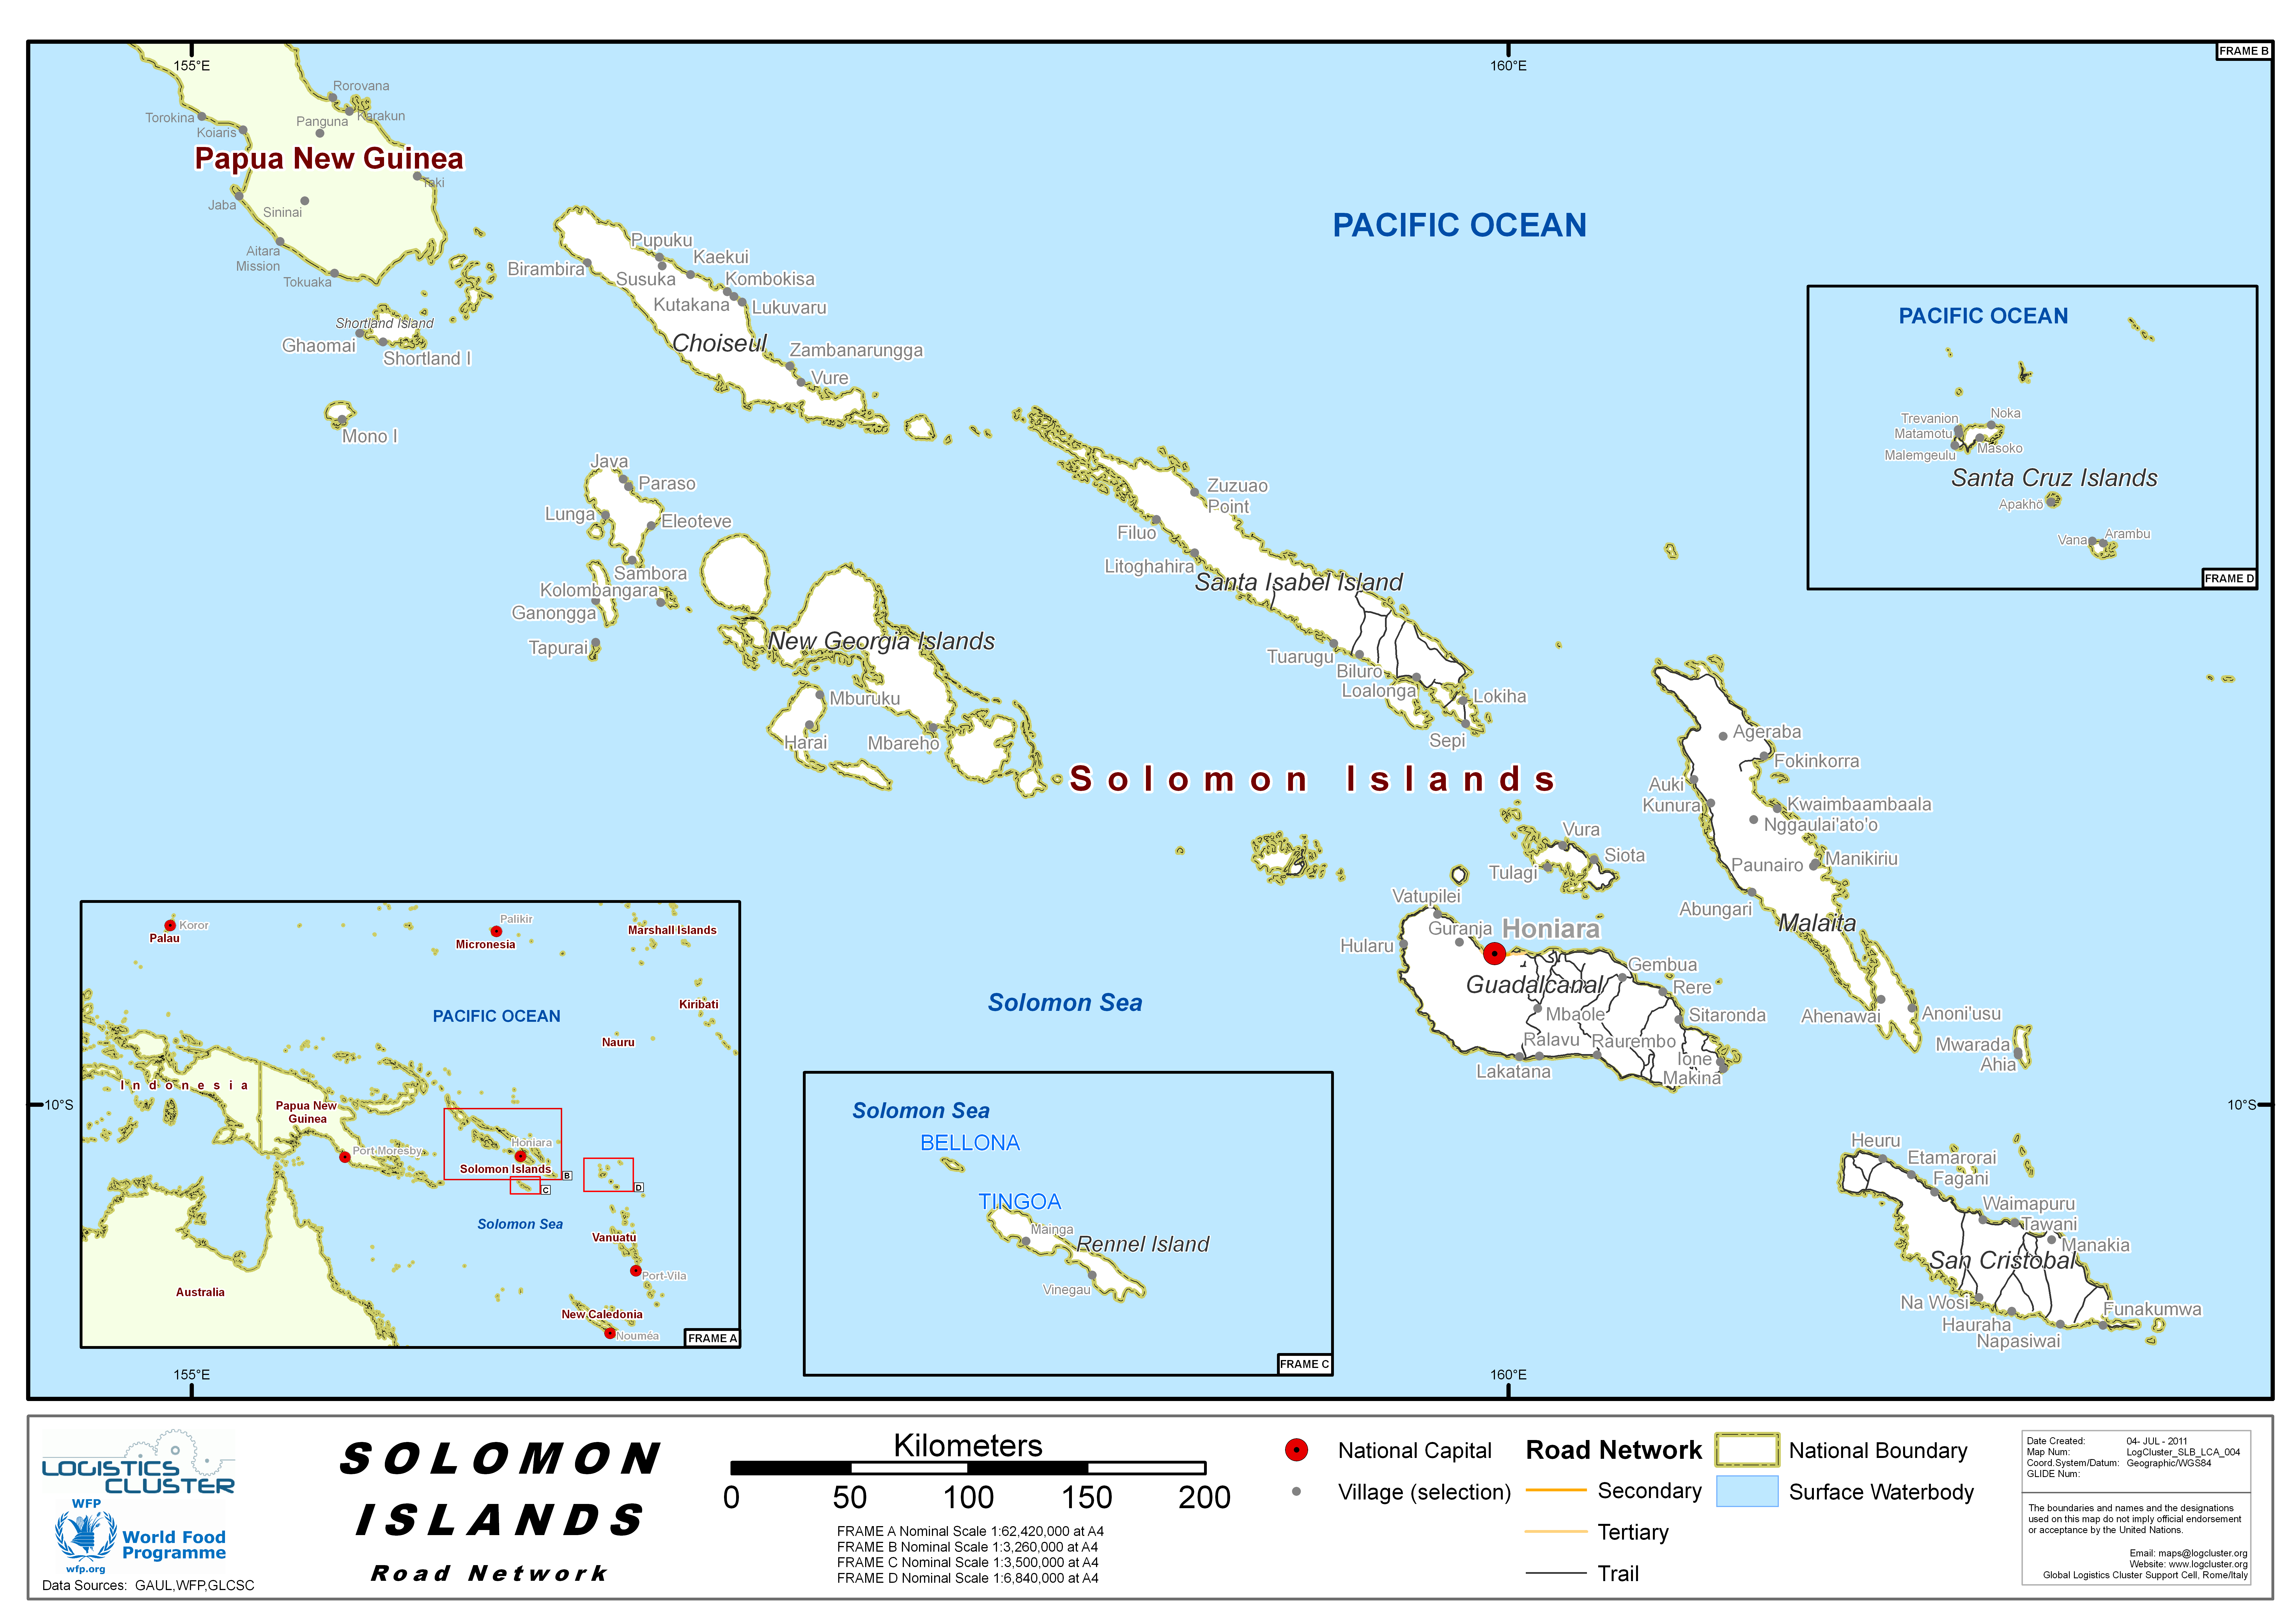 Solomon Islands Road Network 